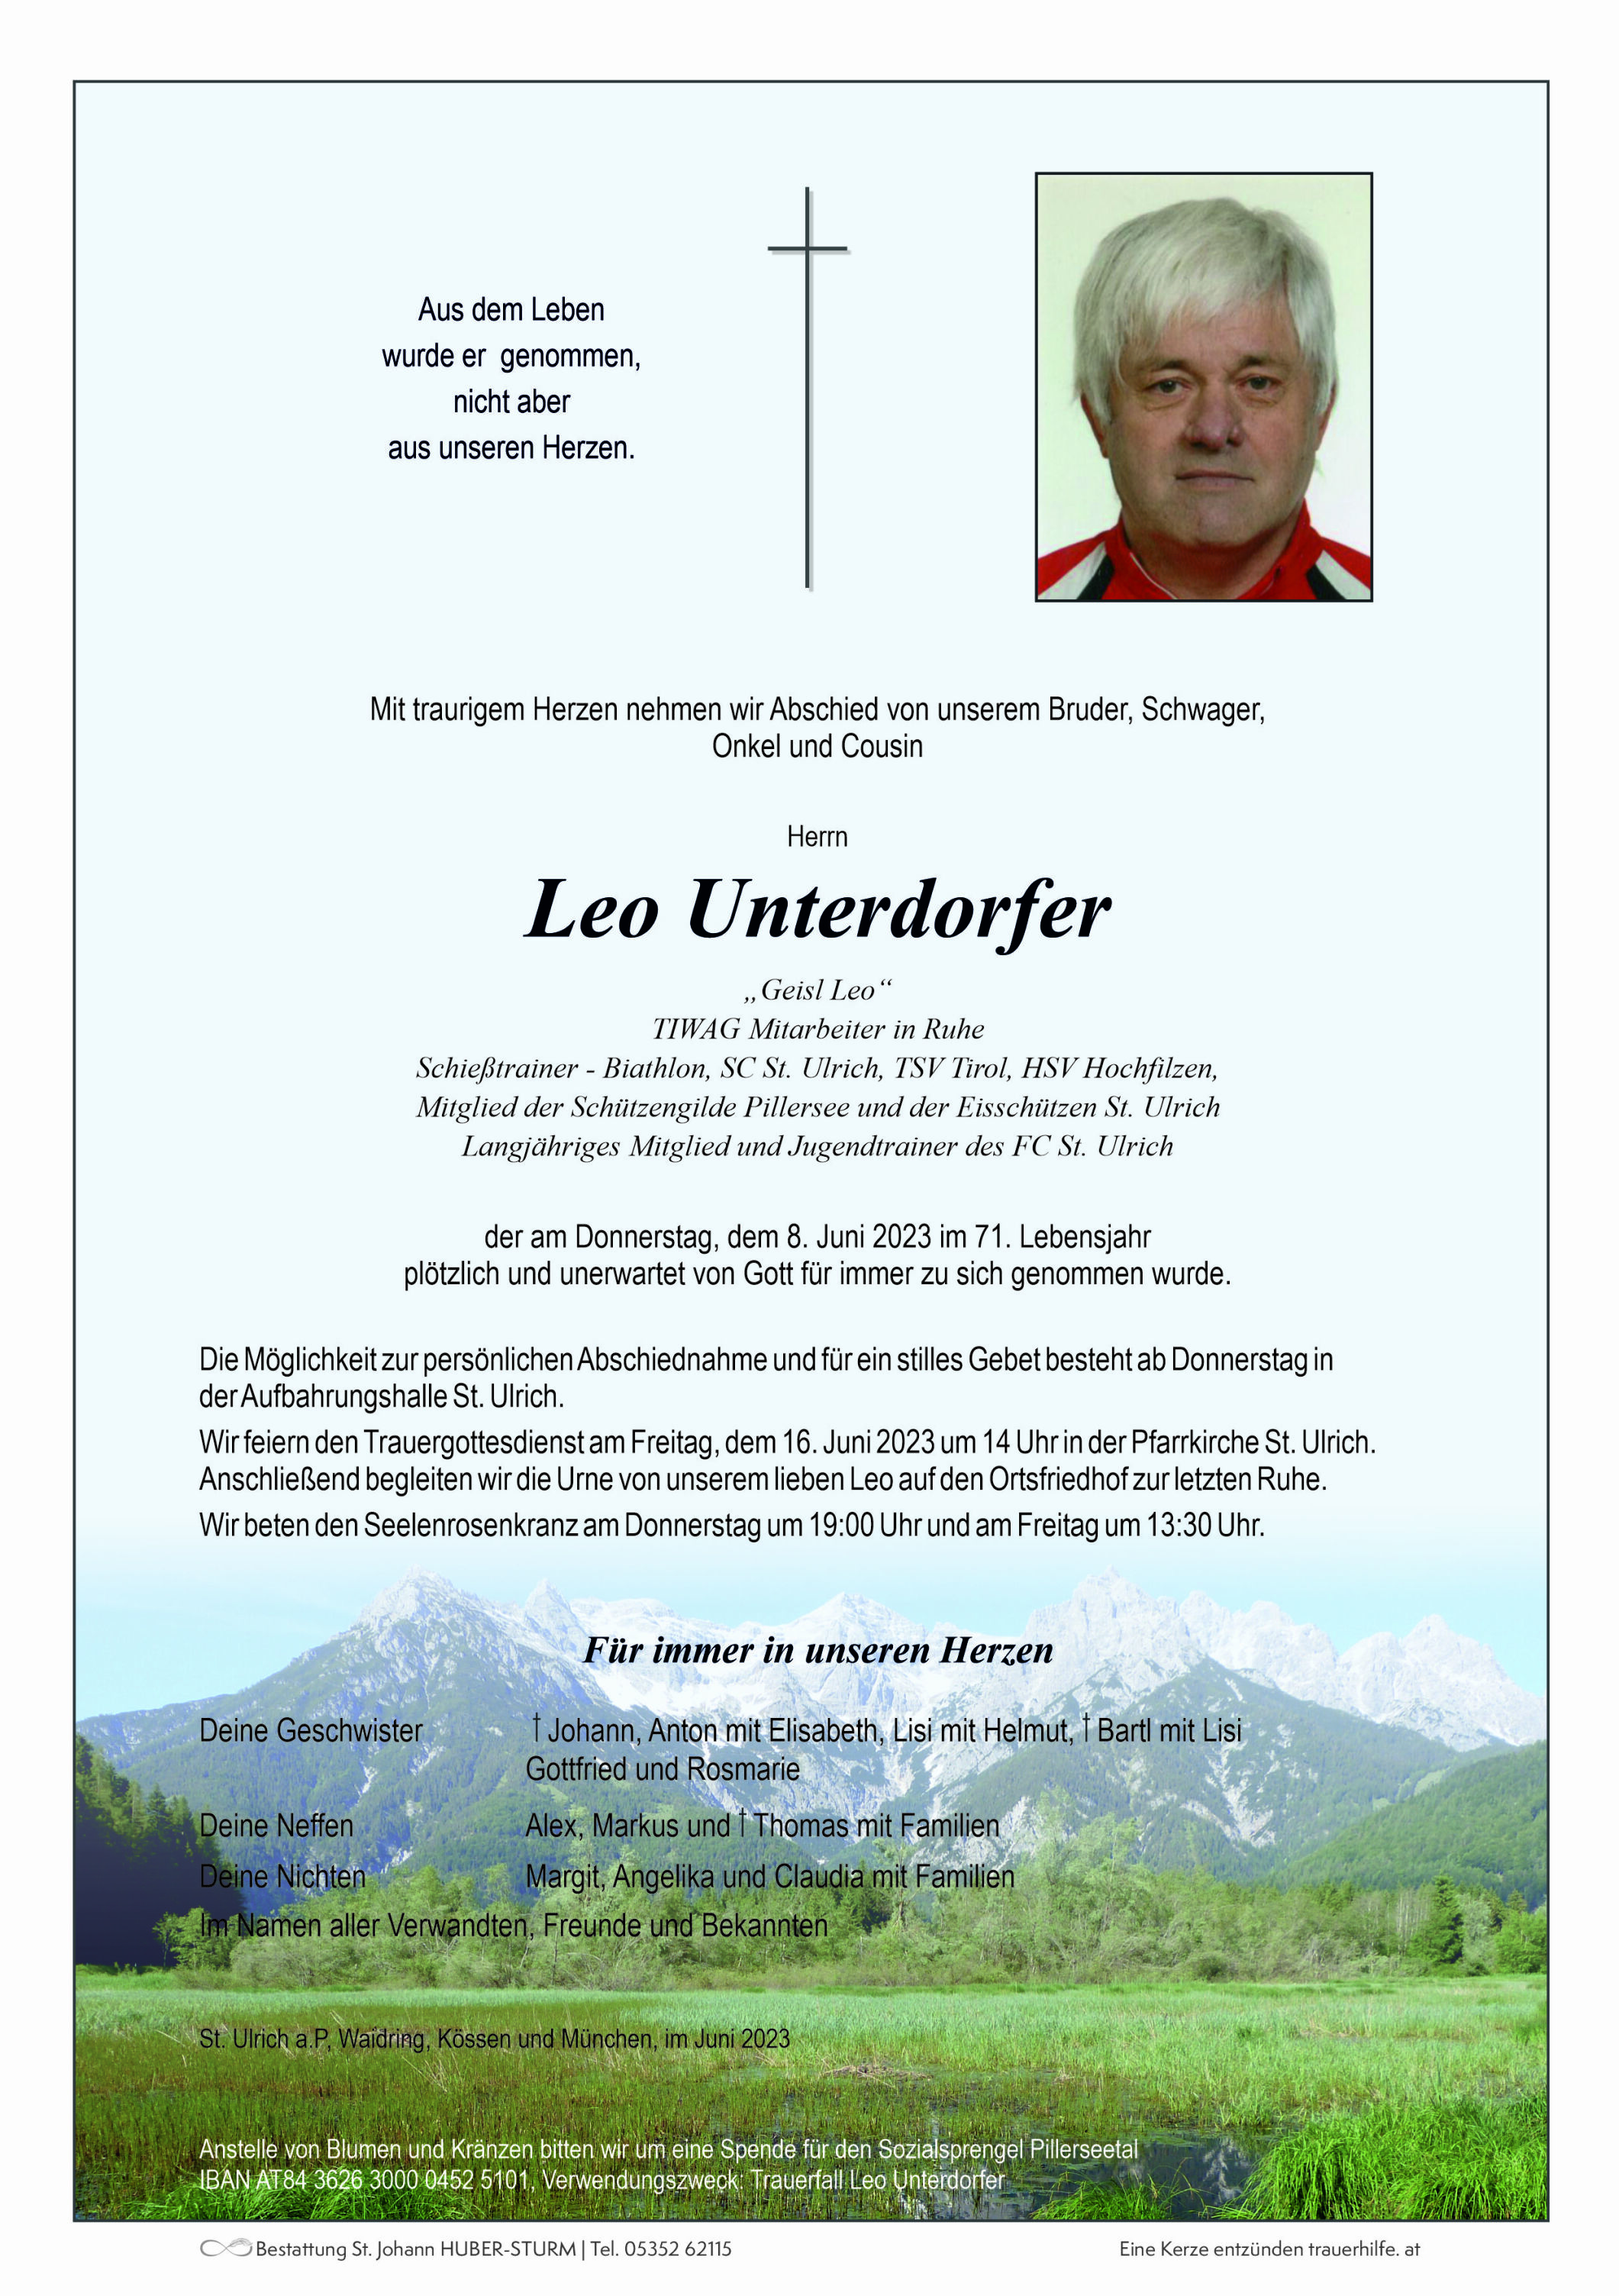 Leo Unterdorfer